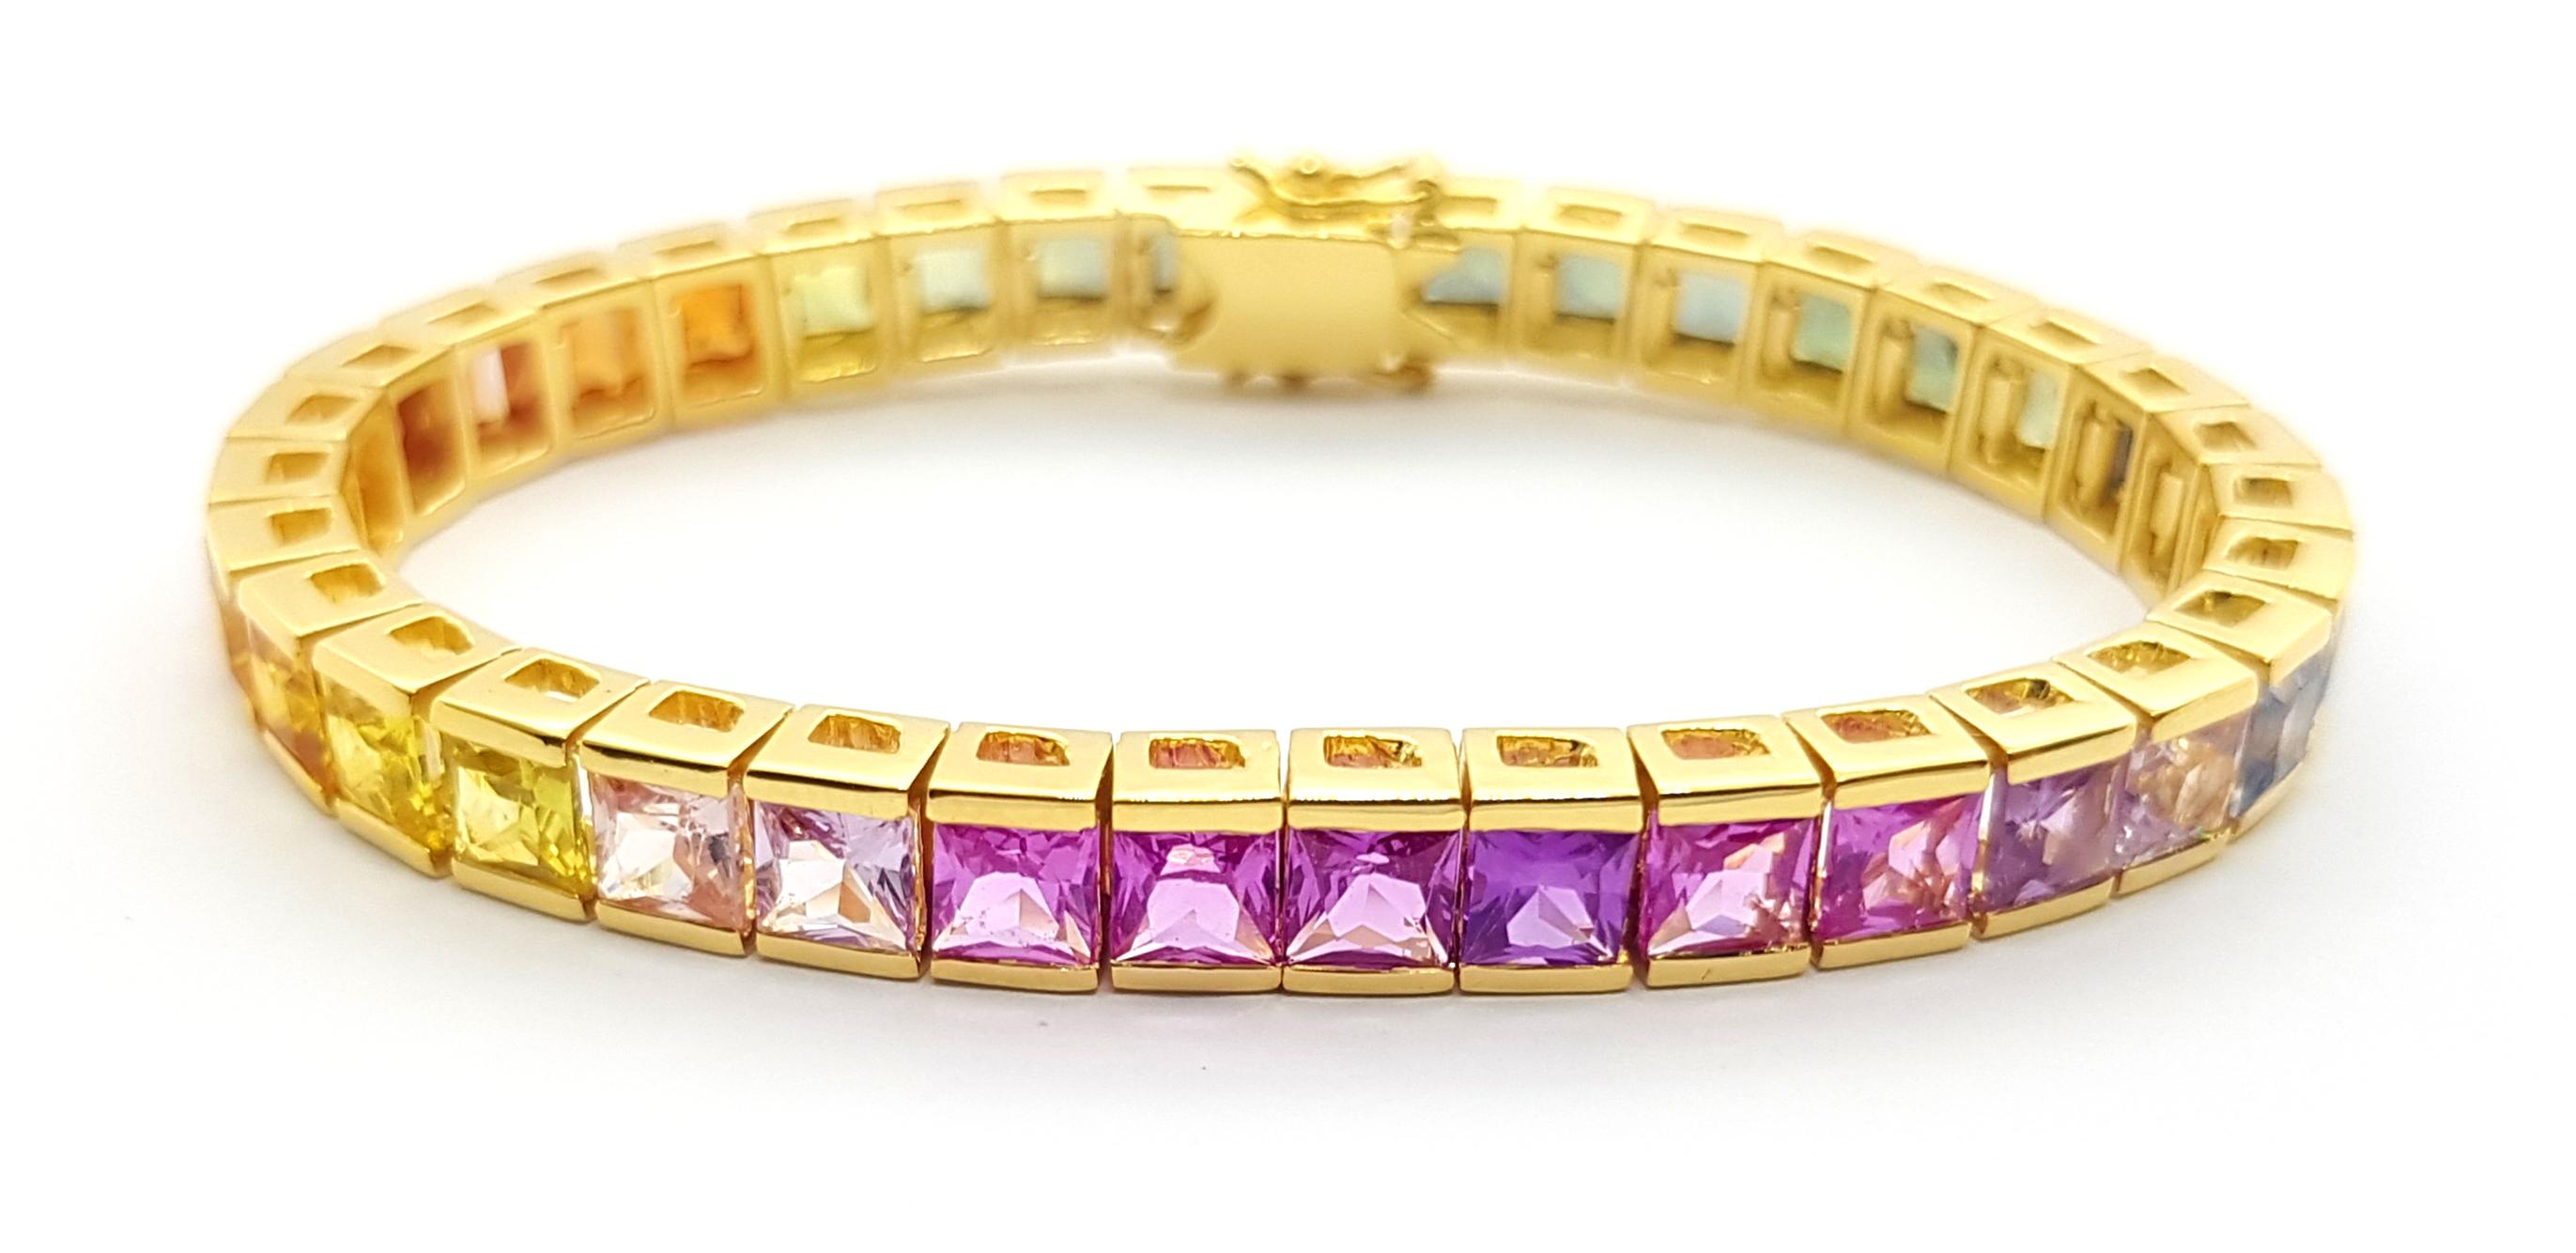 Rainbow Colour Sapphire 24.50 carats Bracelet set in 18K Gold Settings

Width:  0.6 cm 
Length: 17.6 cm
Total Weight: 37.25 grams

